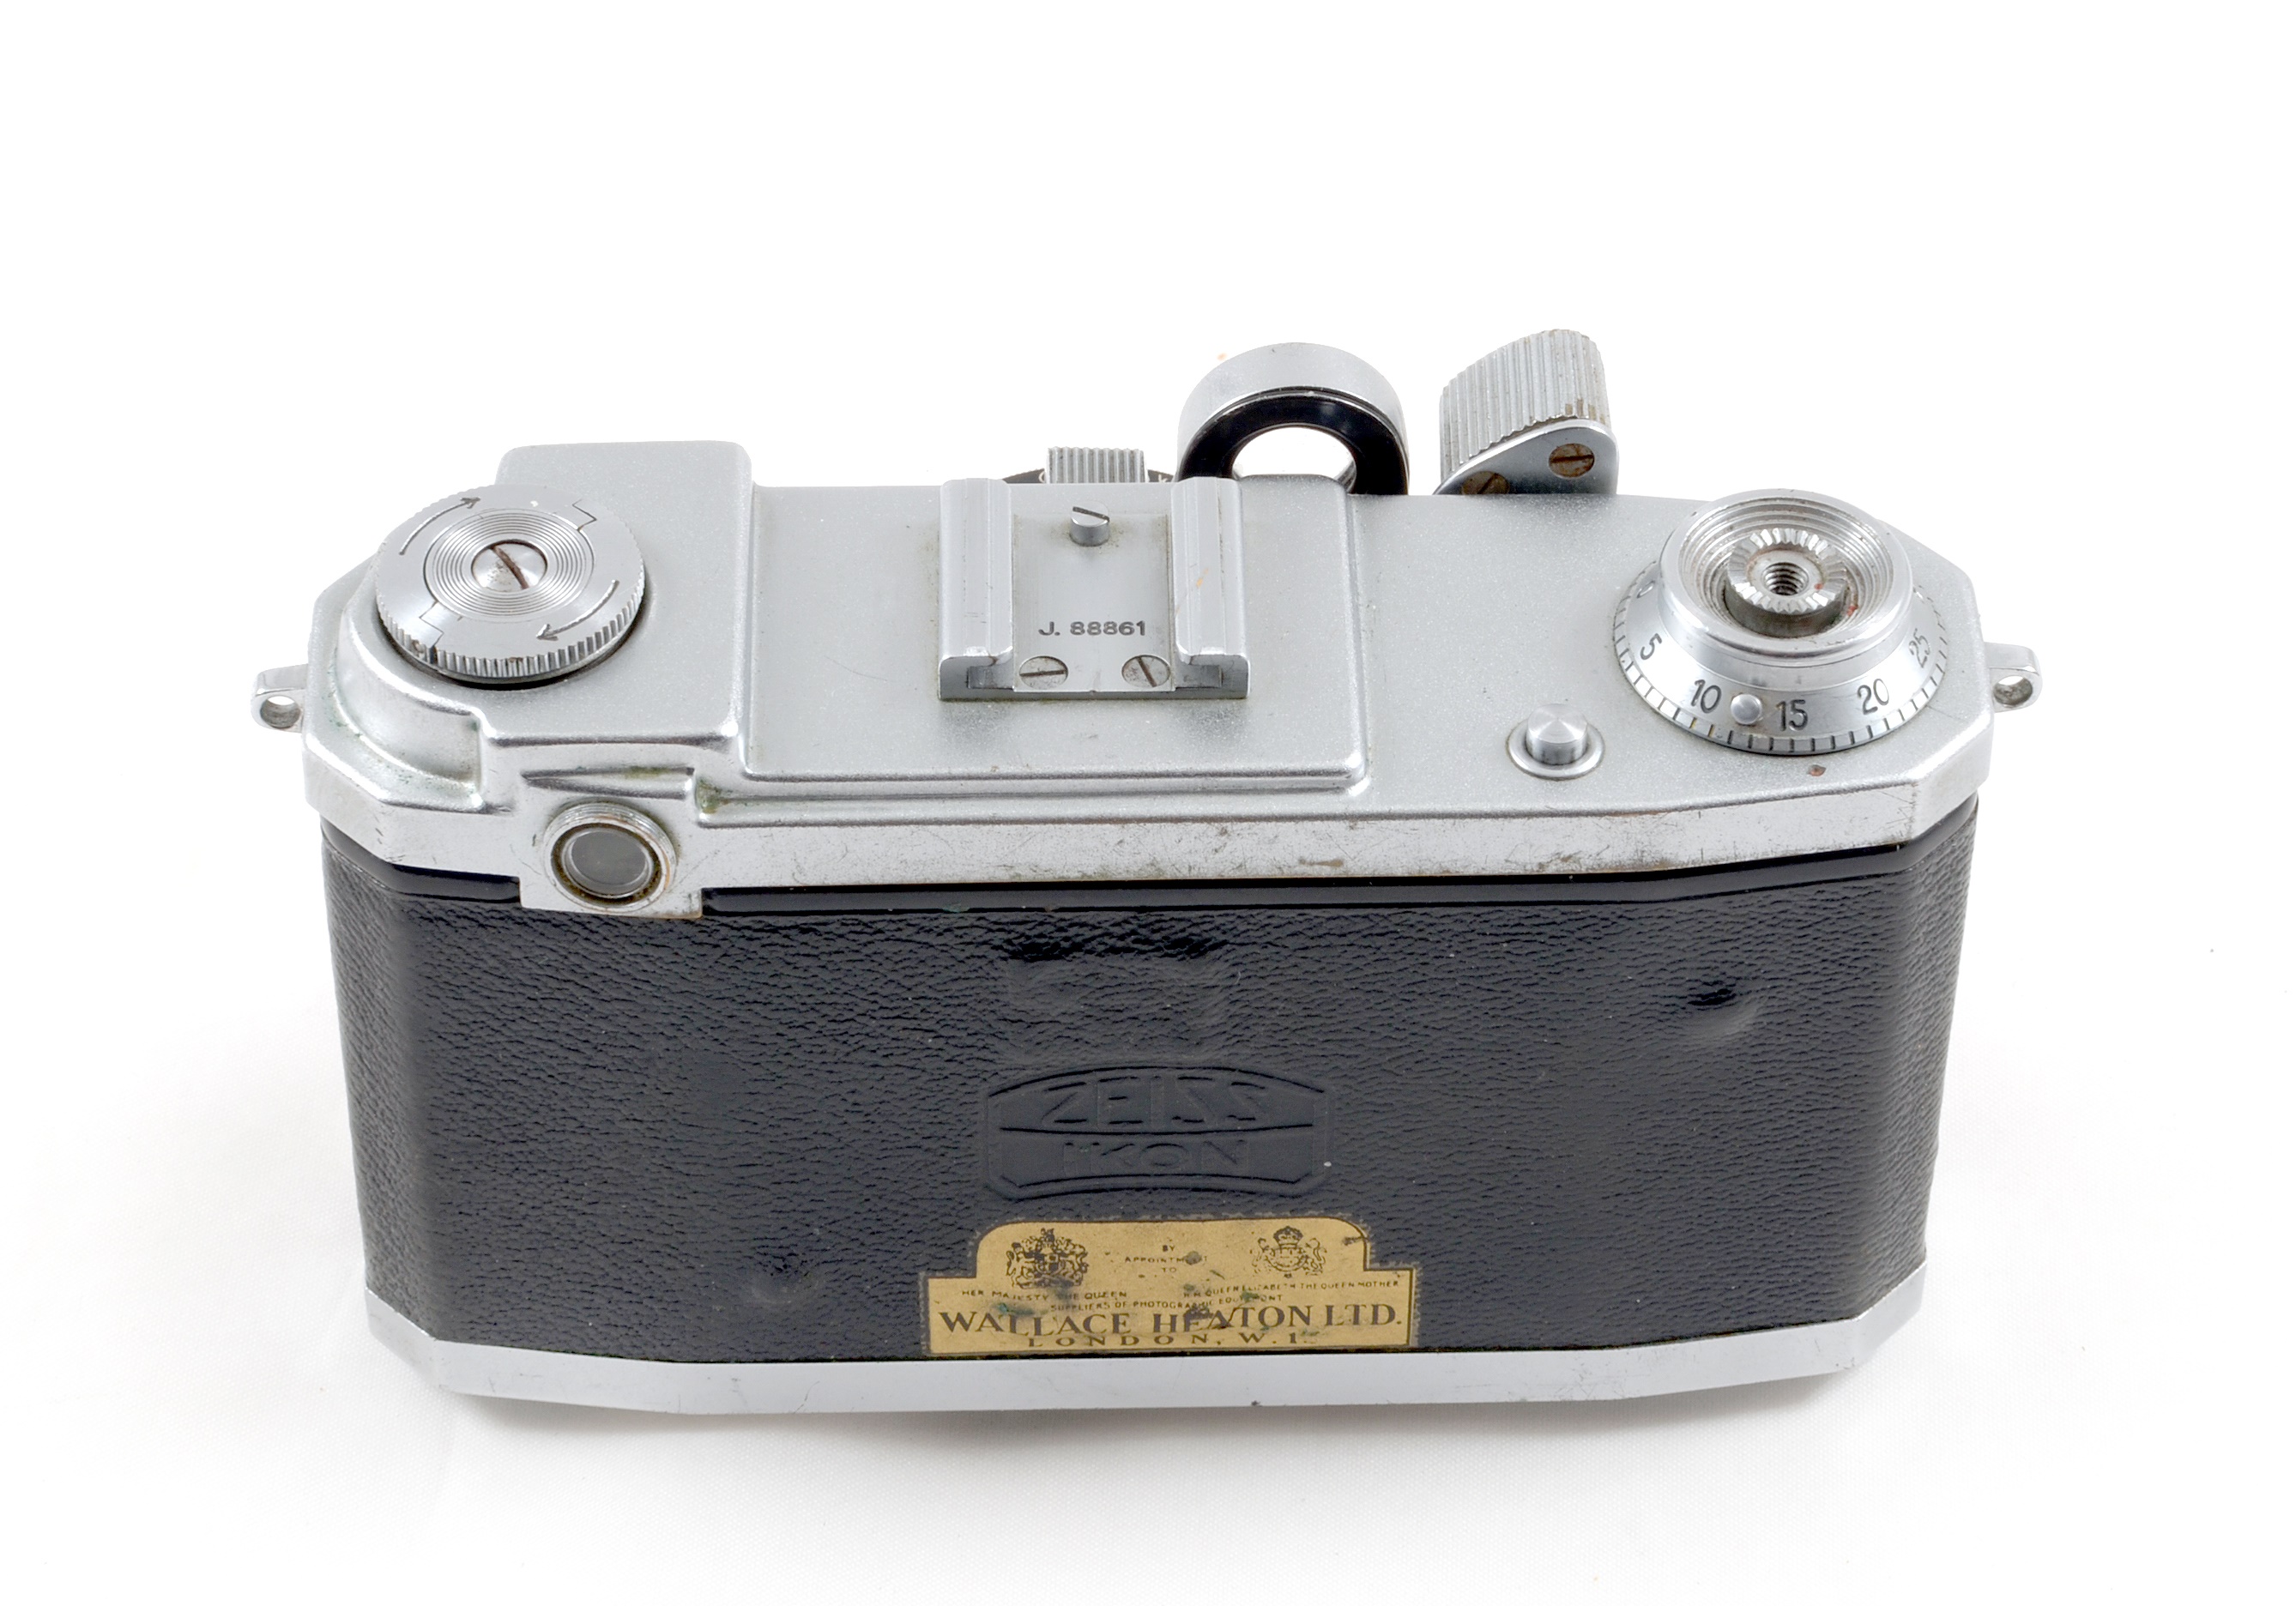 Zeiss Ikon Tenax Rangefinder Camera. #J88861. - Image 2 of 3